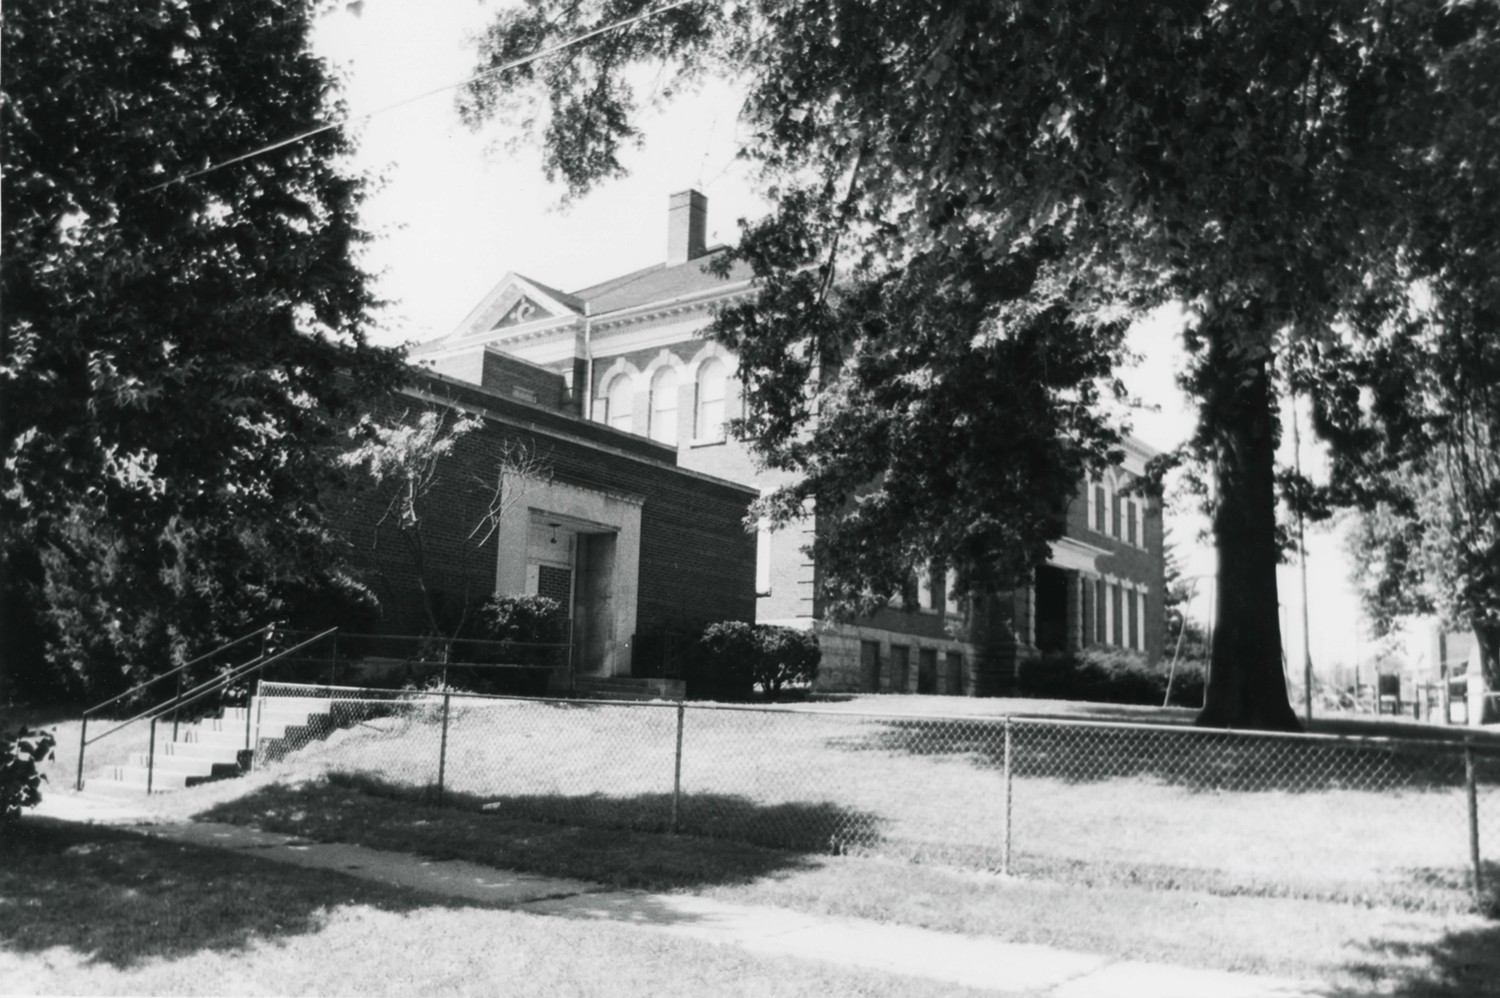 Walnut Street Elementary School, Wooster Ohio East facade facing northwest showing addition (1983)